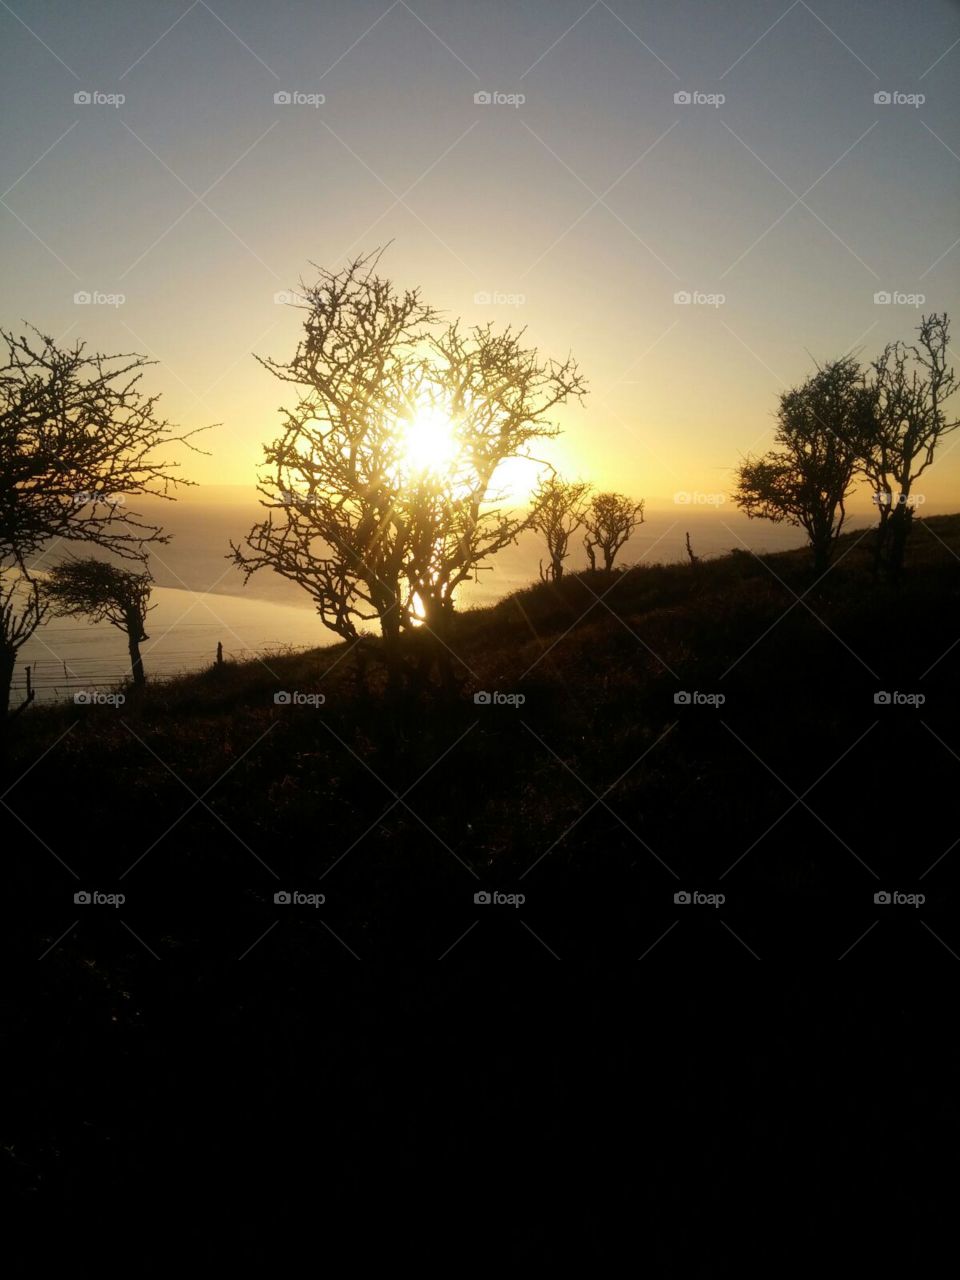 Dawn, Landscape, Sunset, Tree, Silhouette